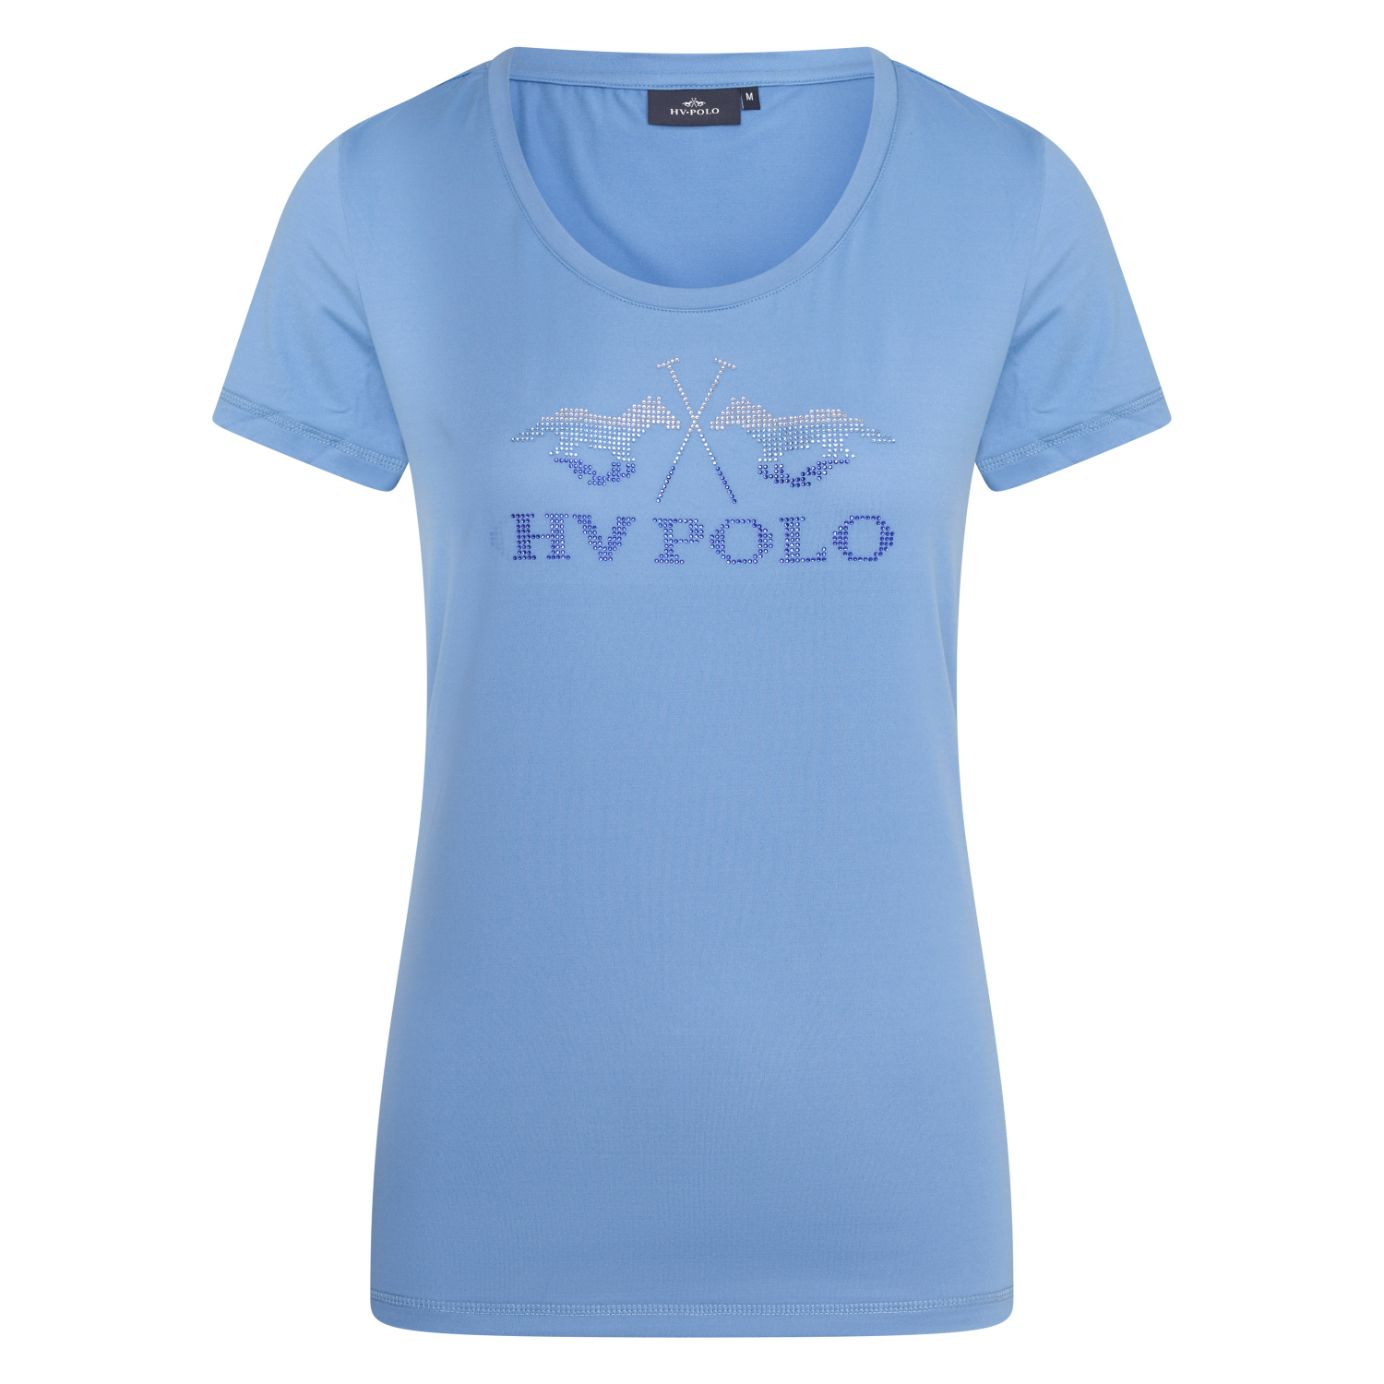 HV Polo Riviera blue favourites limited tech t-shirt